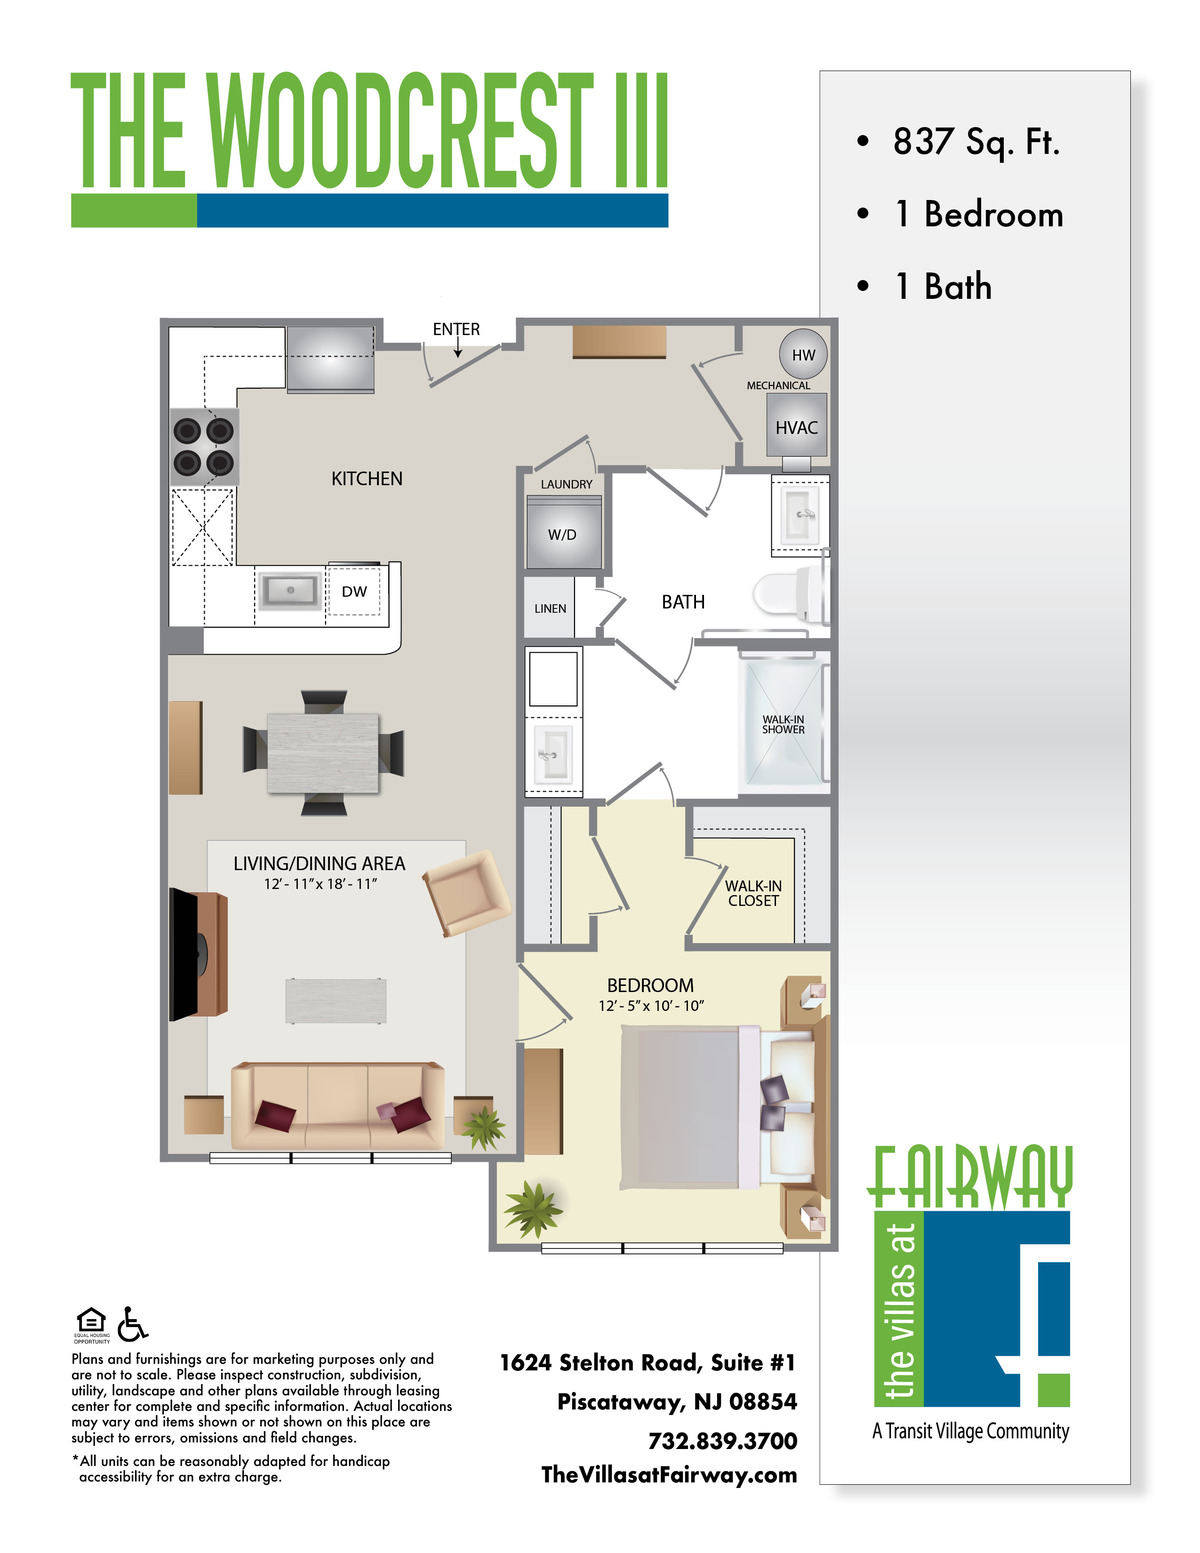 The Villas at Fairway Floor Plan The Woodcrest III